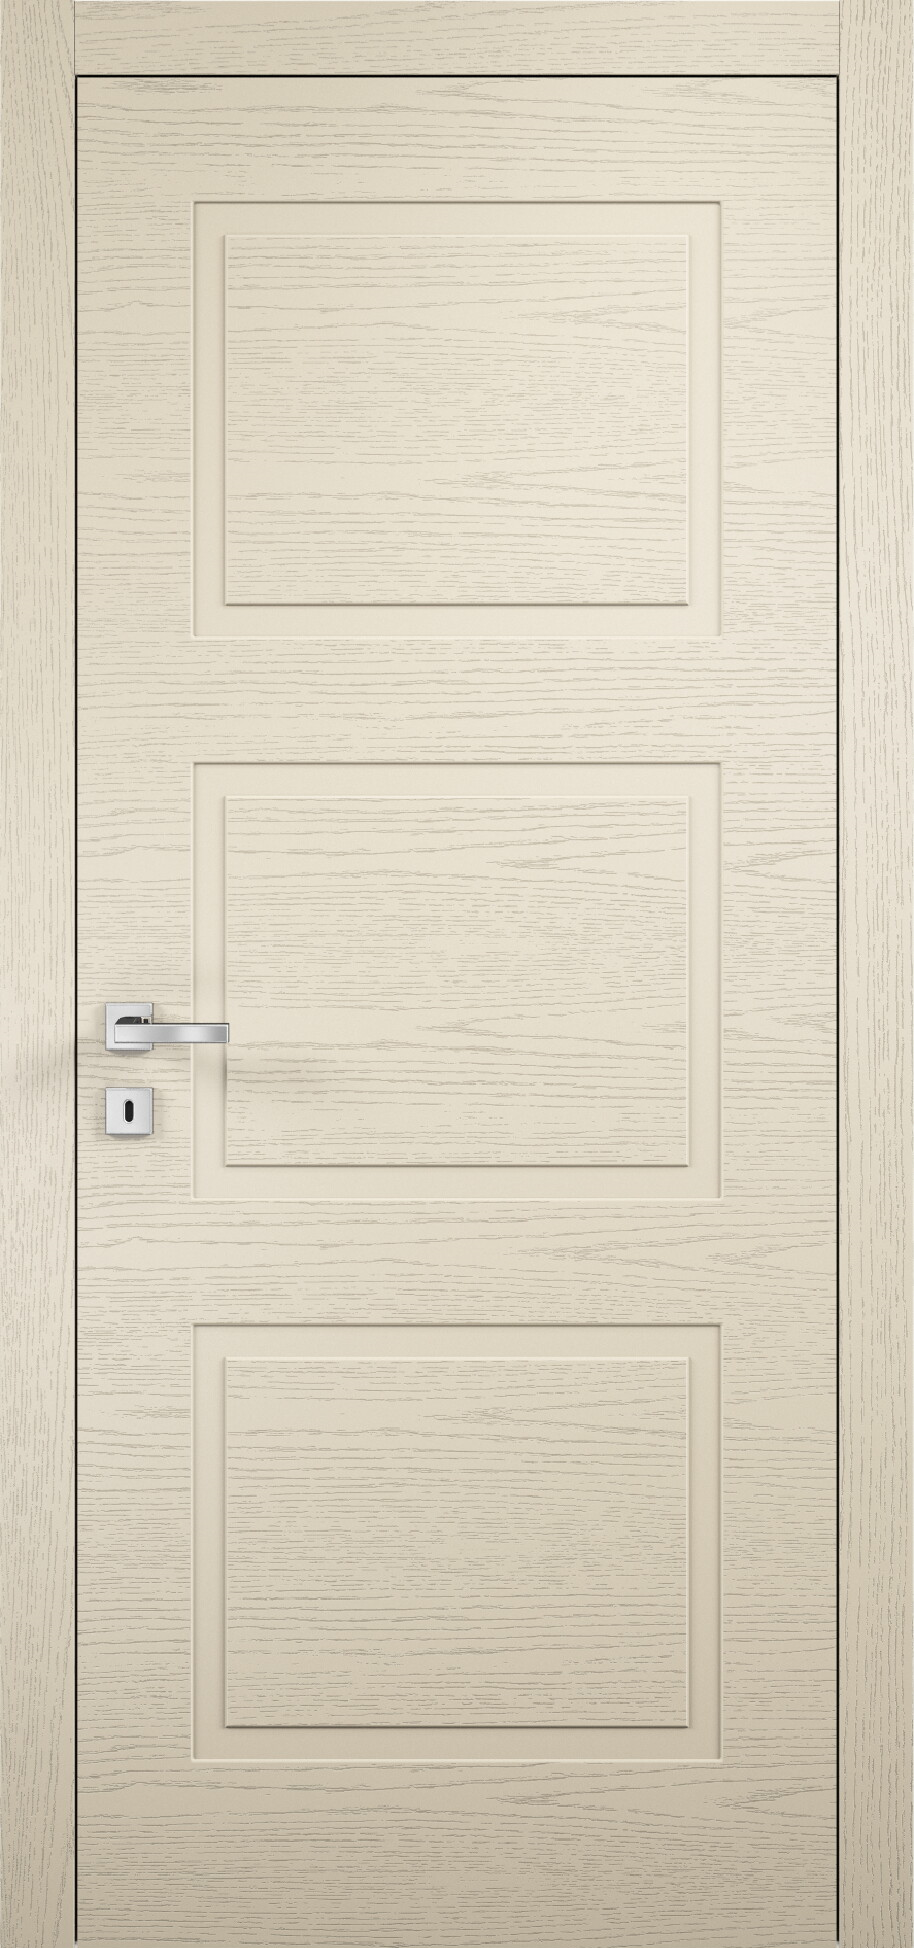 межкомнатные двери эмалированная межкомнатная дверь glamour 105 эмаль аворио